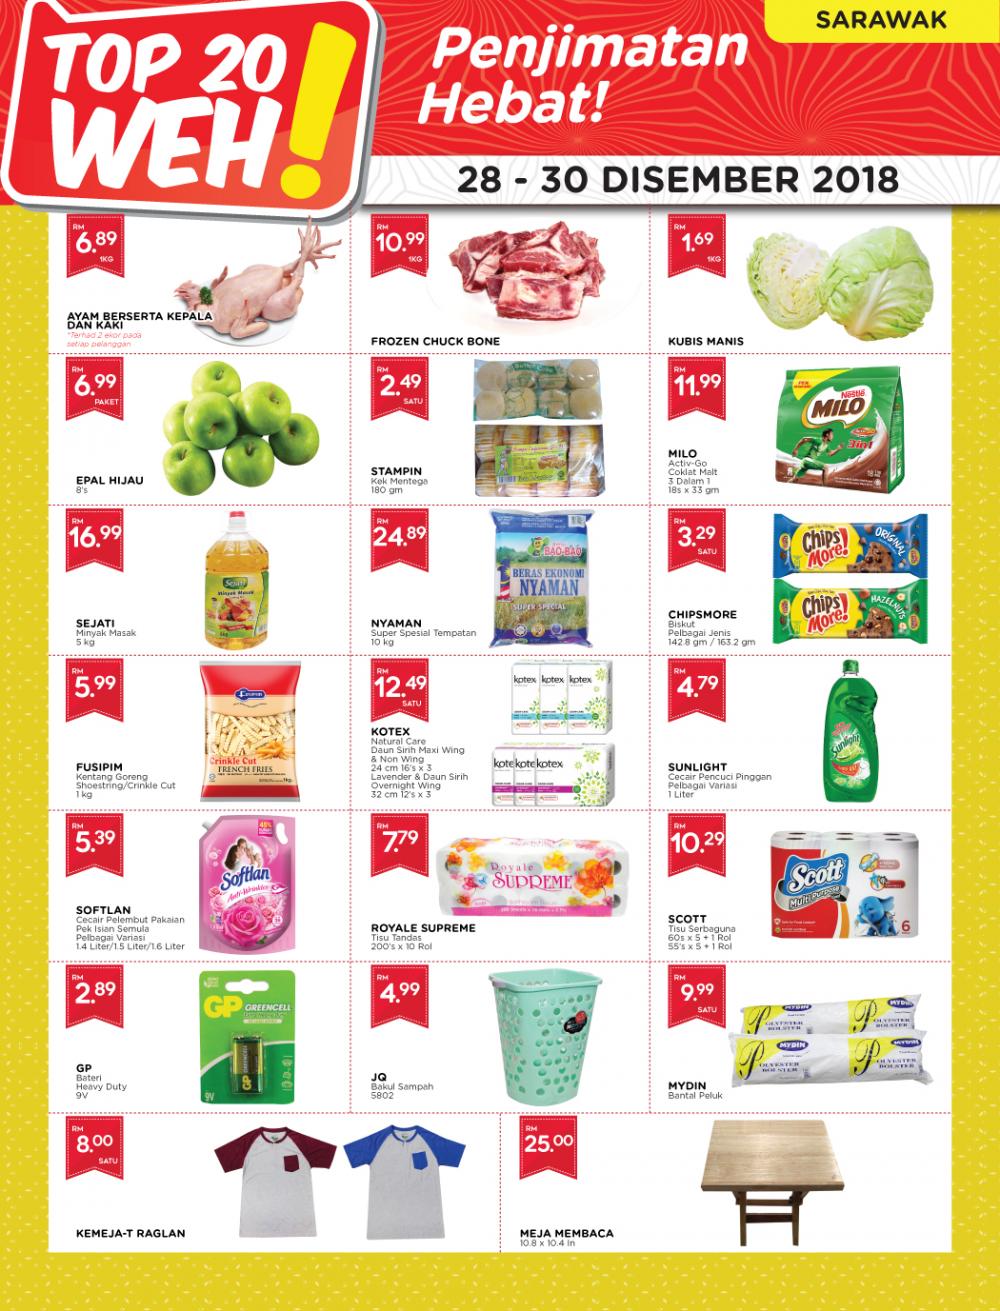 MYDIN TOP 20 WEH Promotion at Sarawak (28 December 2018 - 30 December 2018)